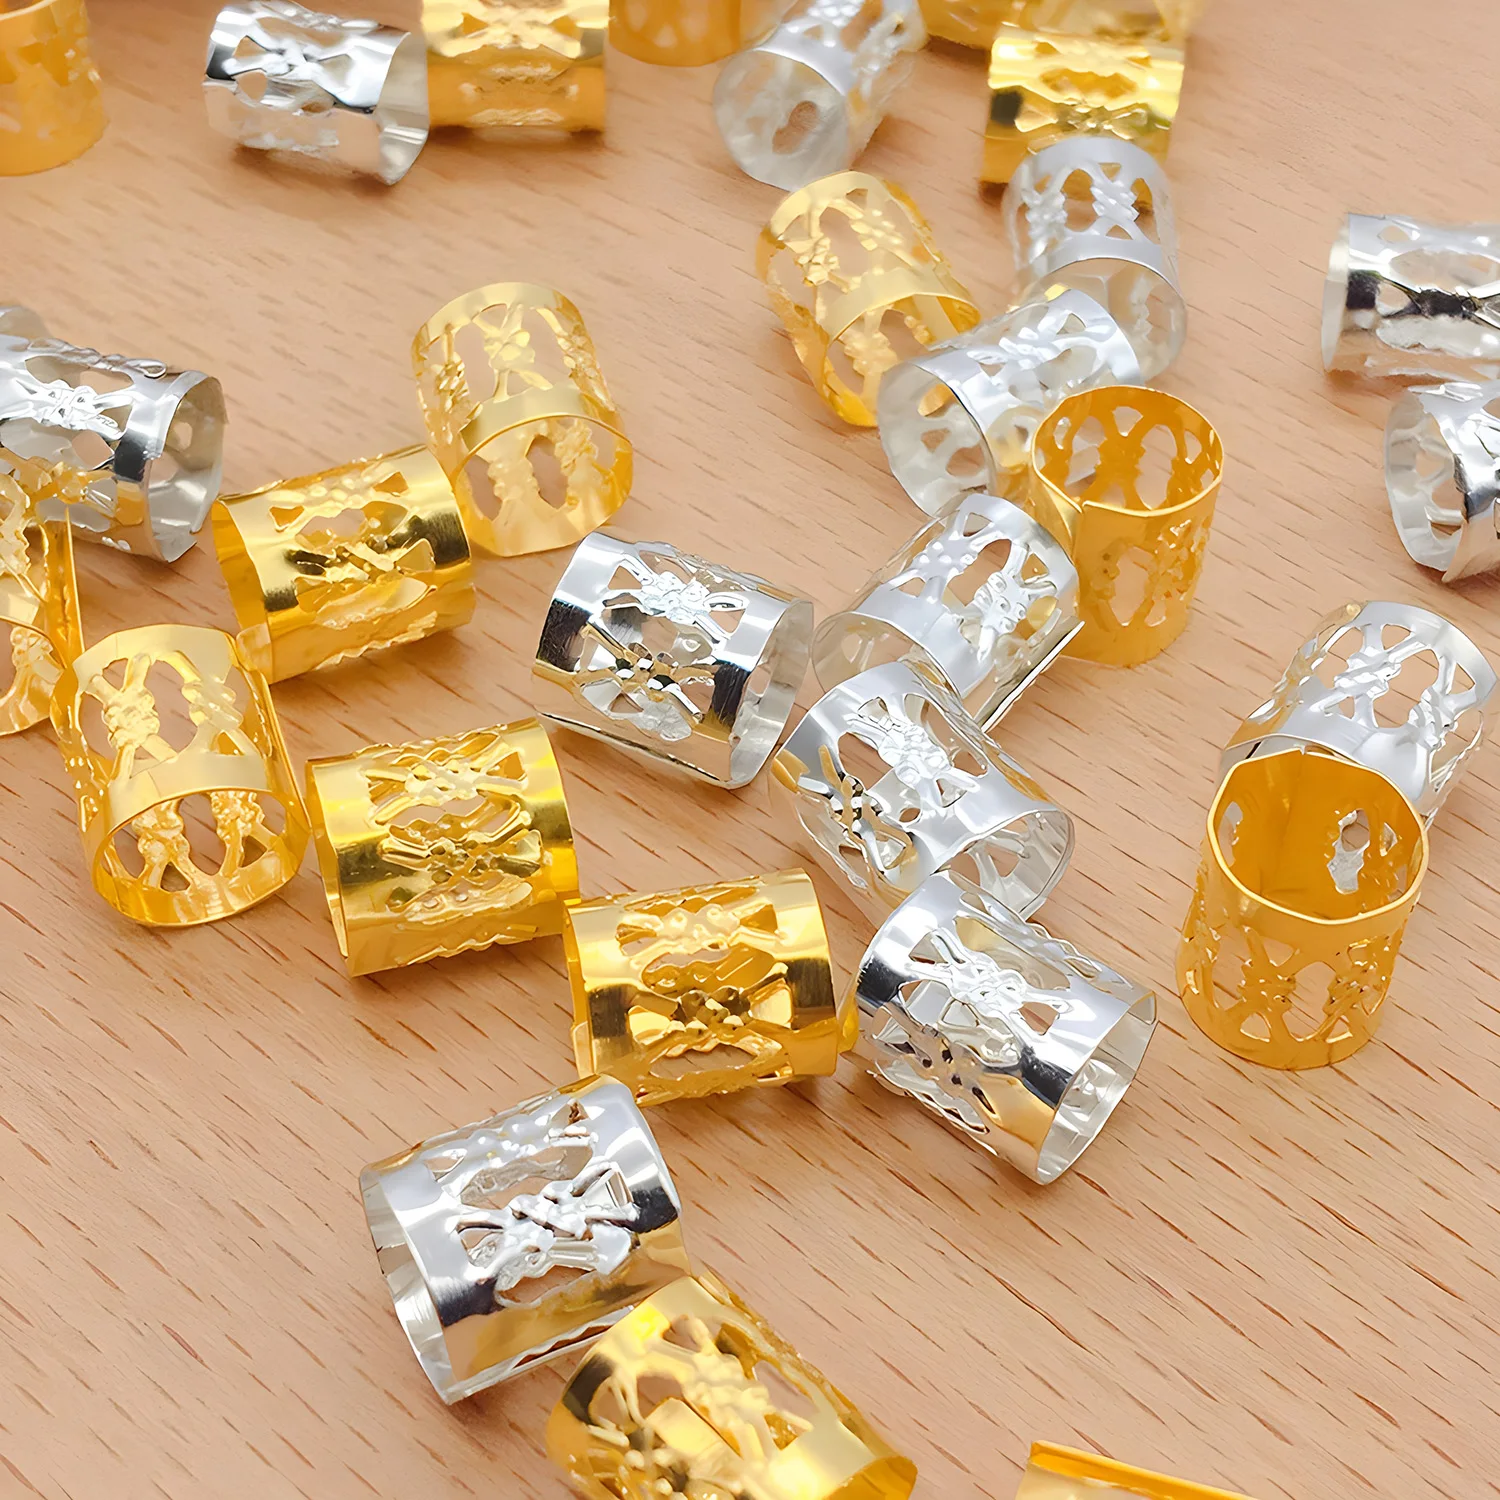 

100pcs/lot Wholesale Dreadlock Beads Gold Silver Mixed Color Hair Metal Rings for Dreadlocks Braiding Hole Micro Ring